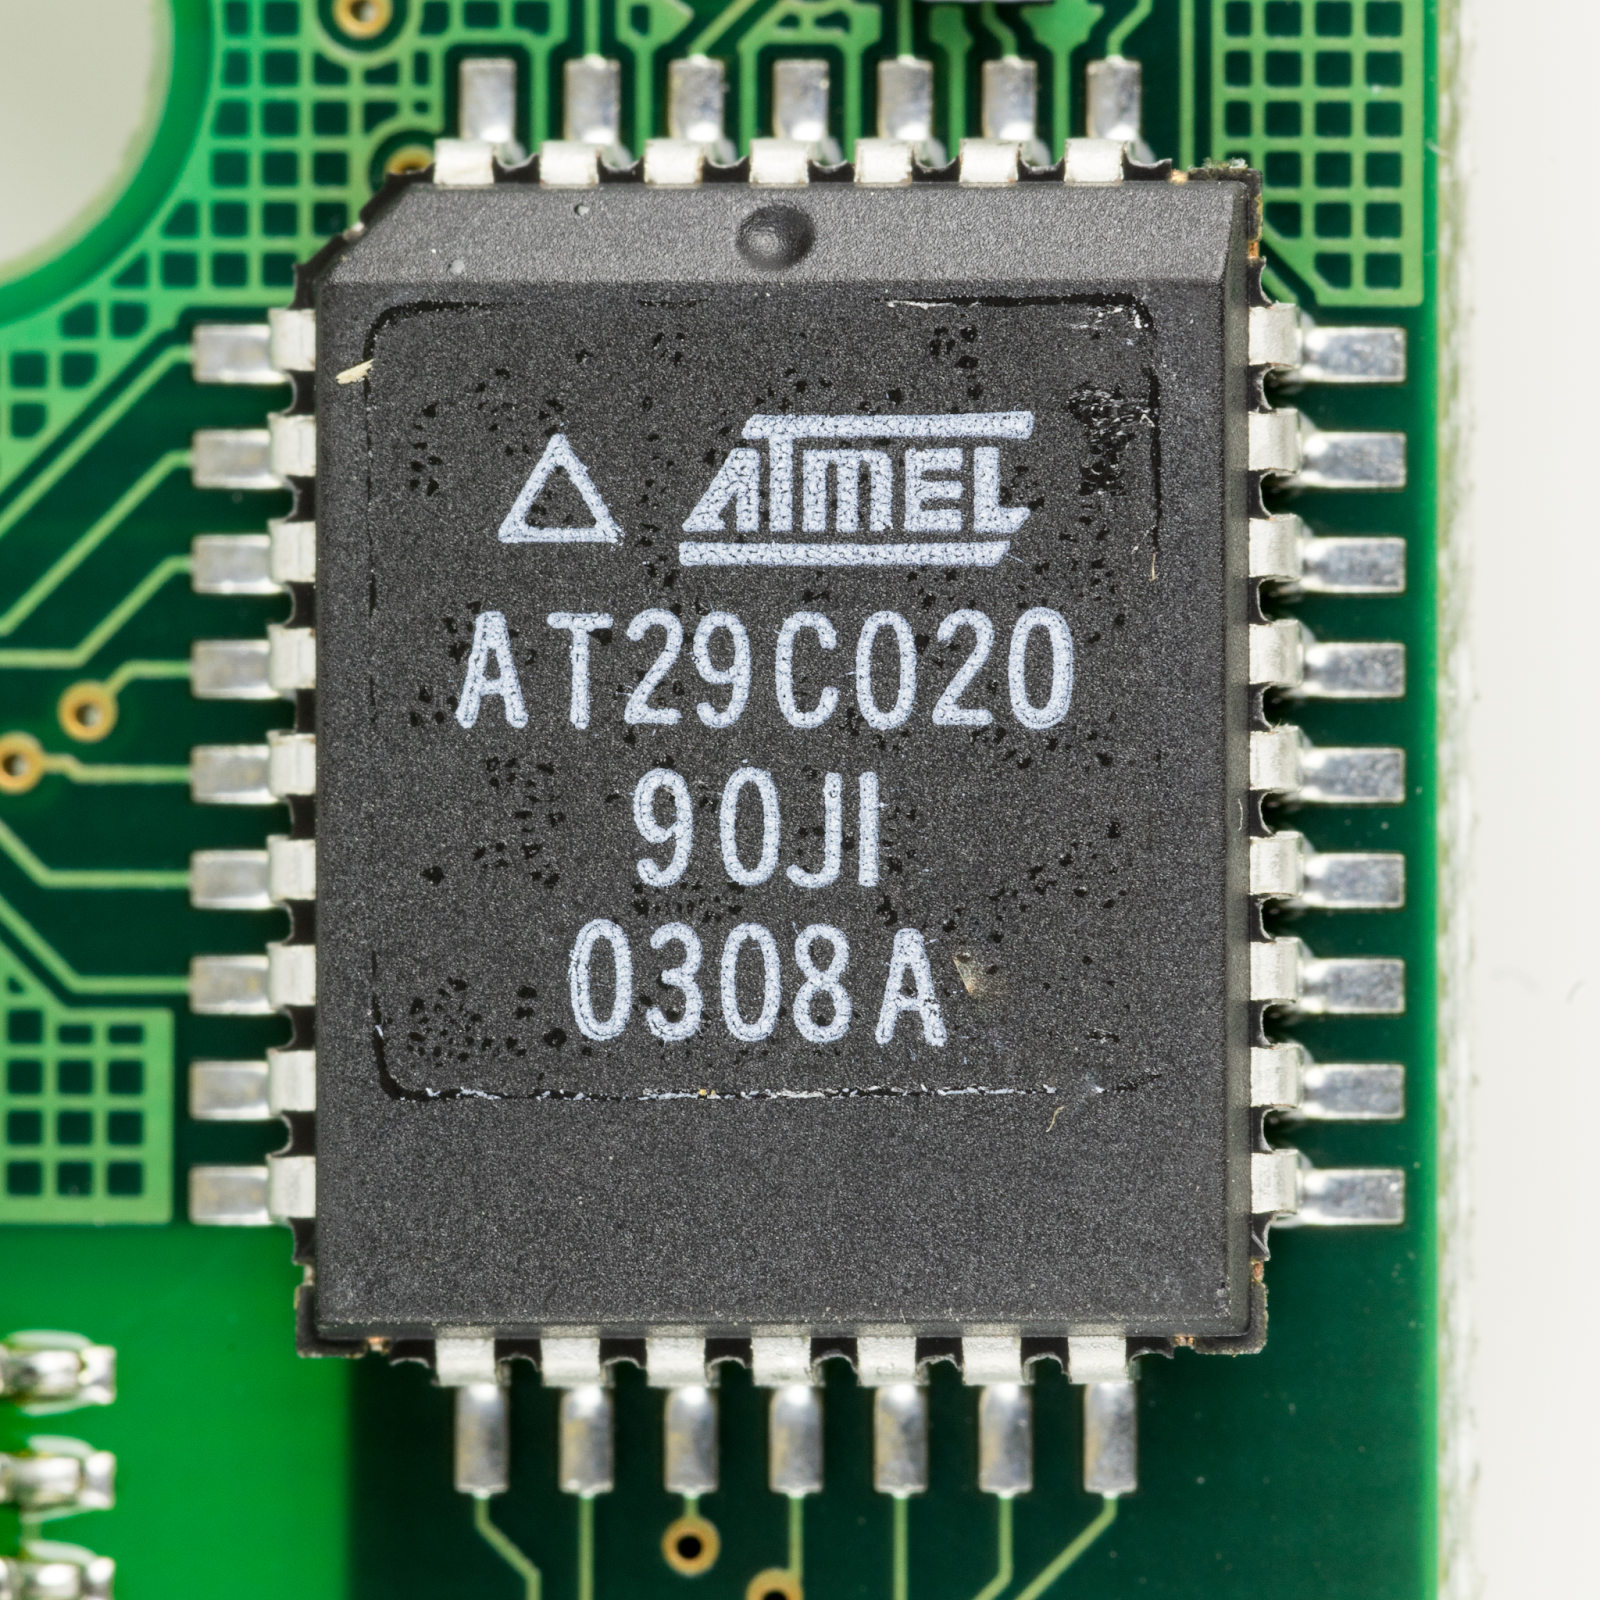 Atmel AT29C020 Microcontroller